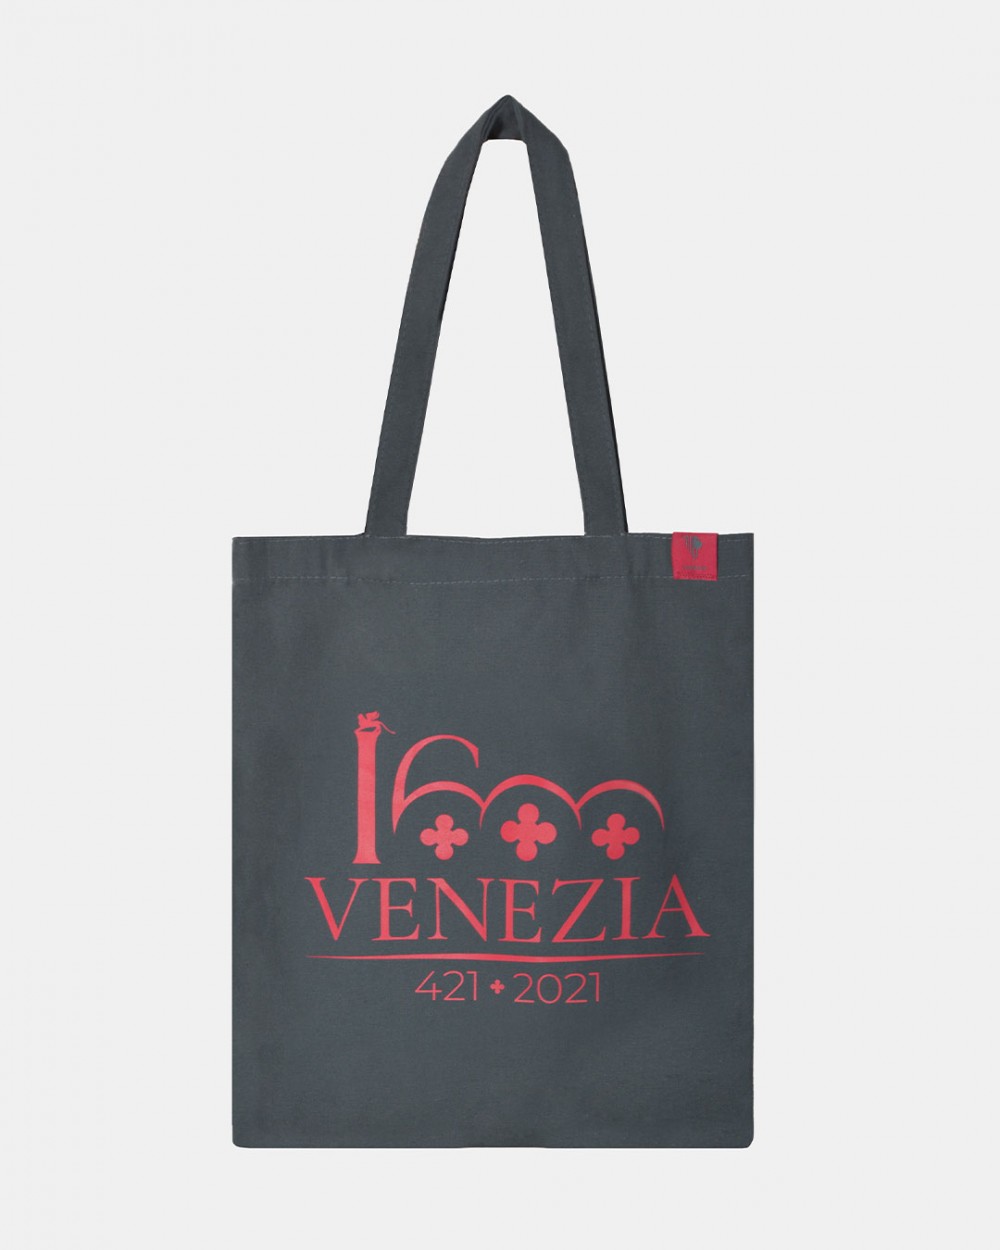 Grey shopper red Venezia 1600 logotype front